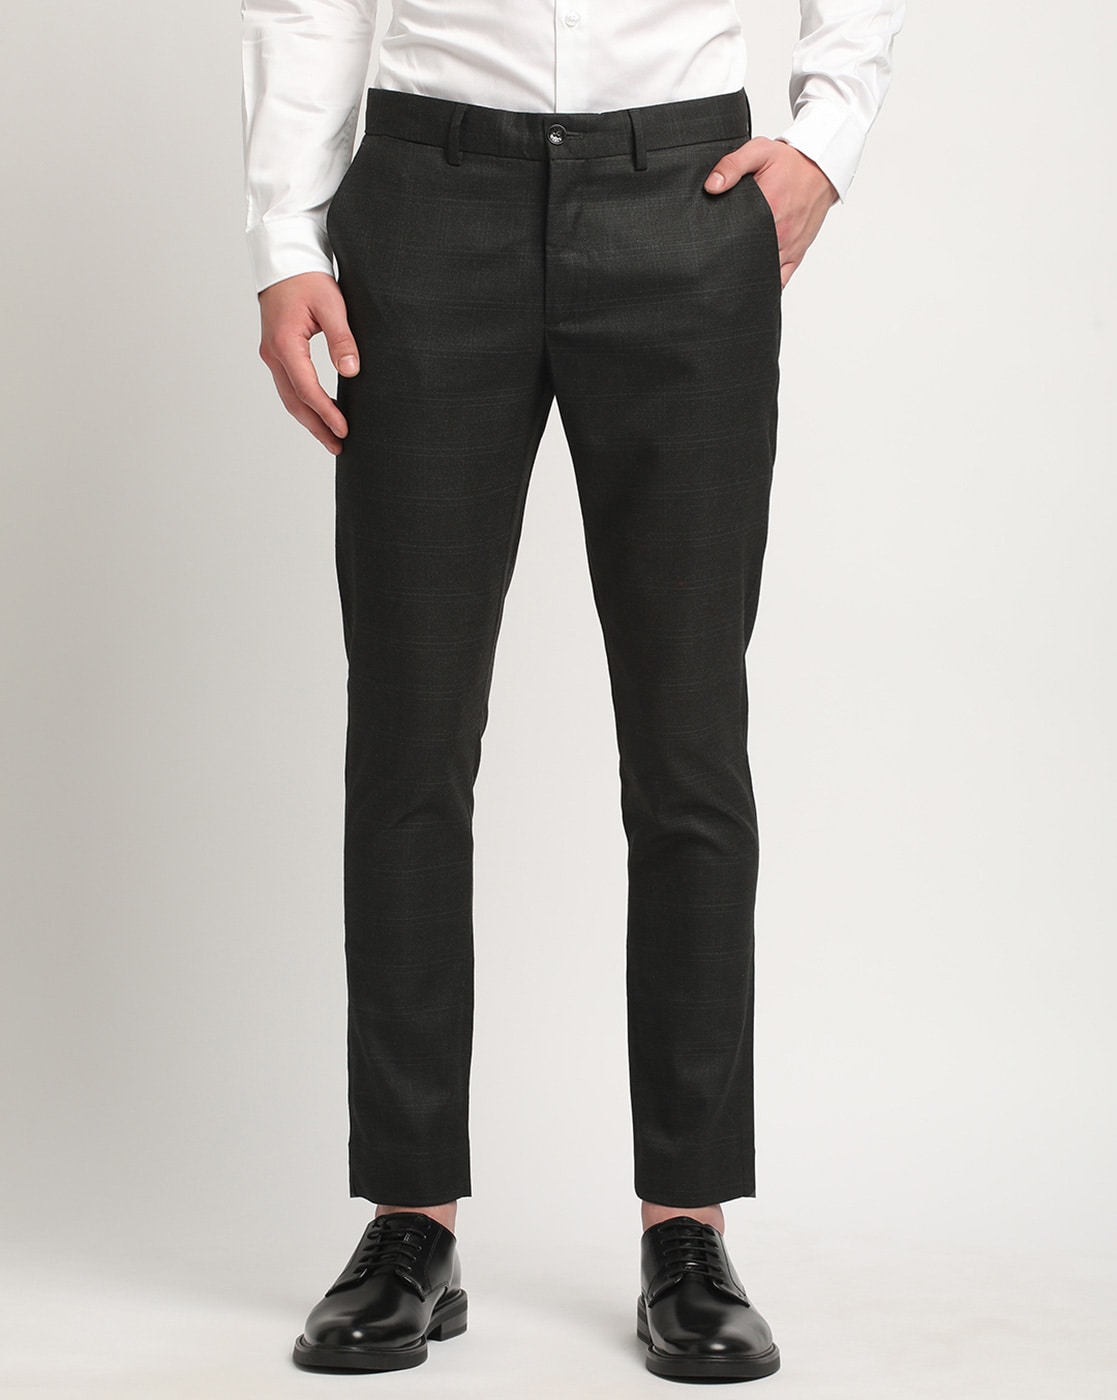 Black Button Up Pu Skinny Pants | Pants | PrettyLittleThing